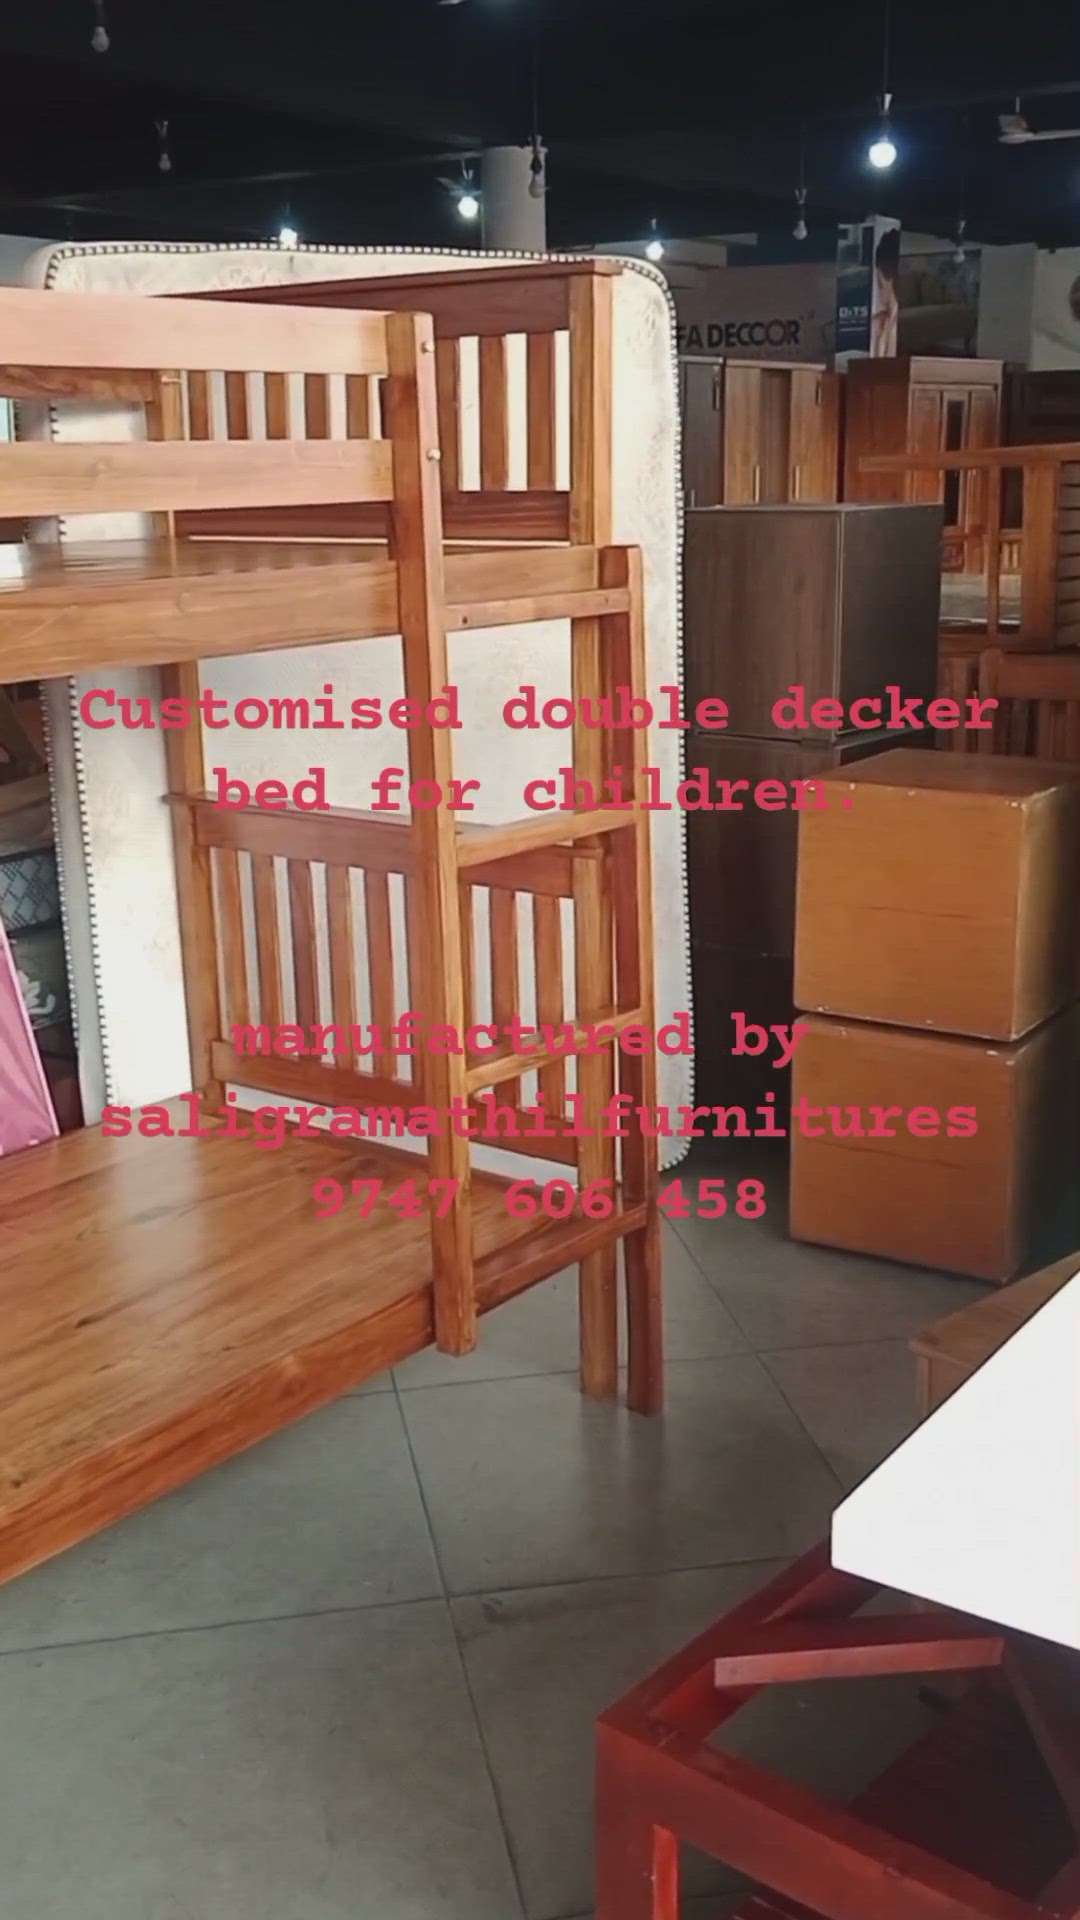 customised double decker bed for children
SALIGRAMATHIL FURNITURES
9747606458

 #saligramathil  #doubledecker #cottage #intreior  #furnitures #BedroomDecor #childrenroom